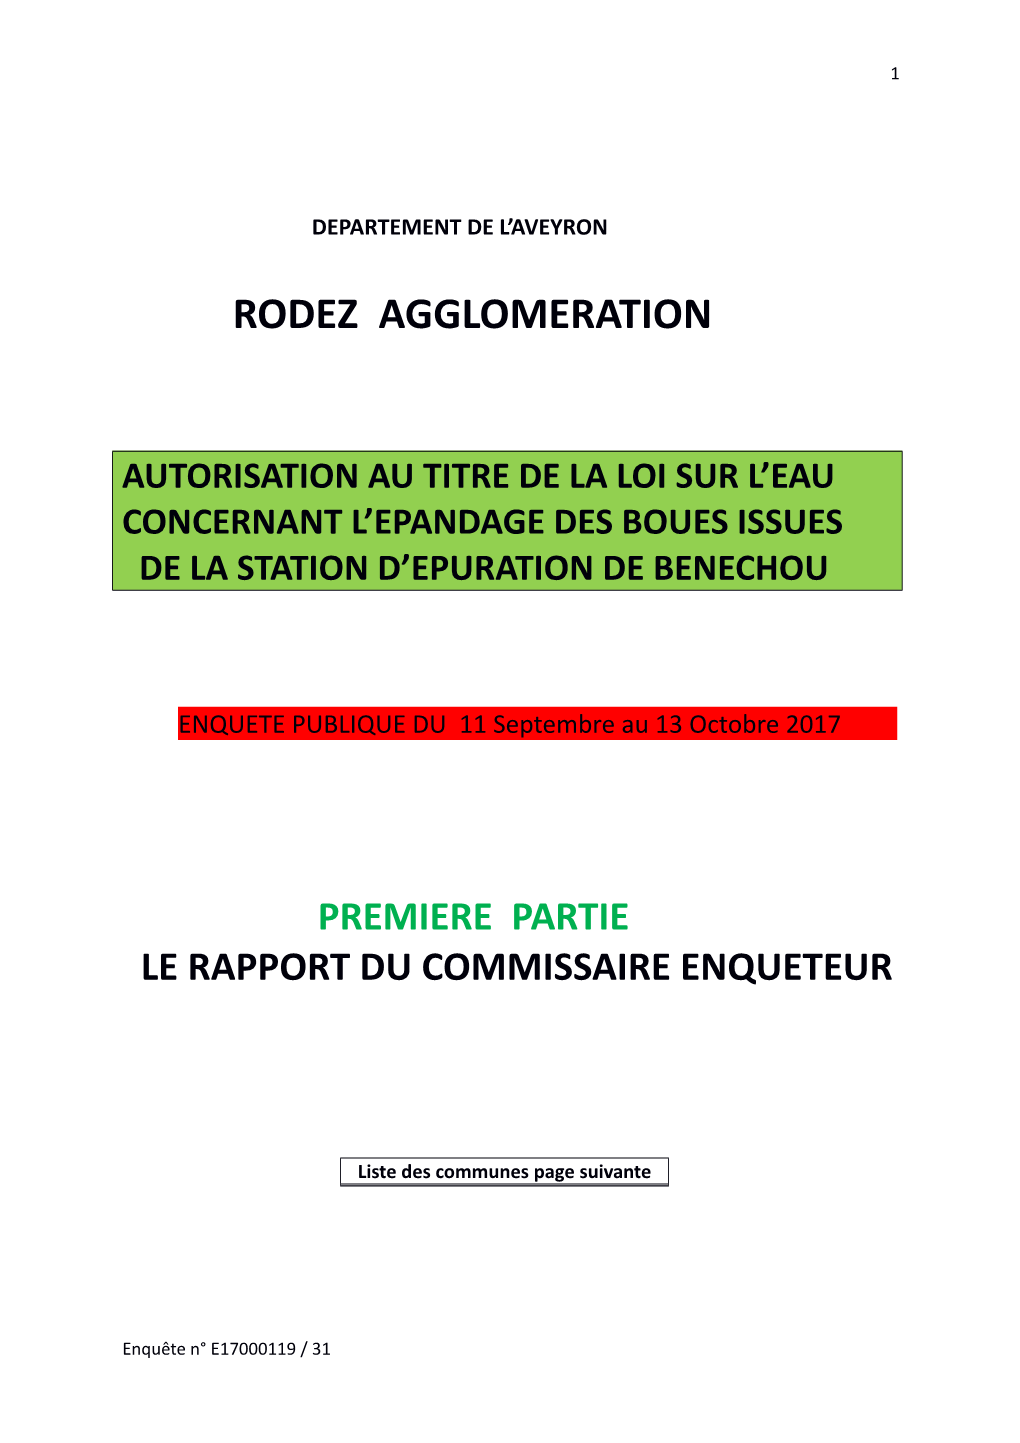 Rodez Agglomeration